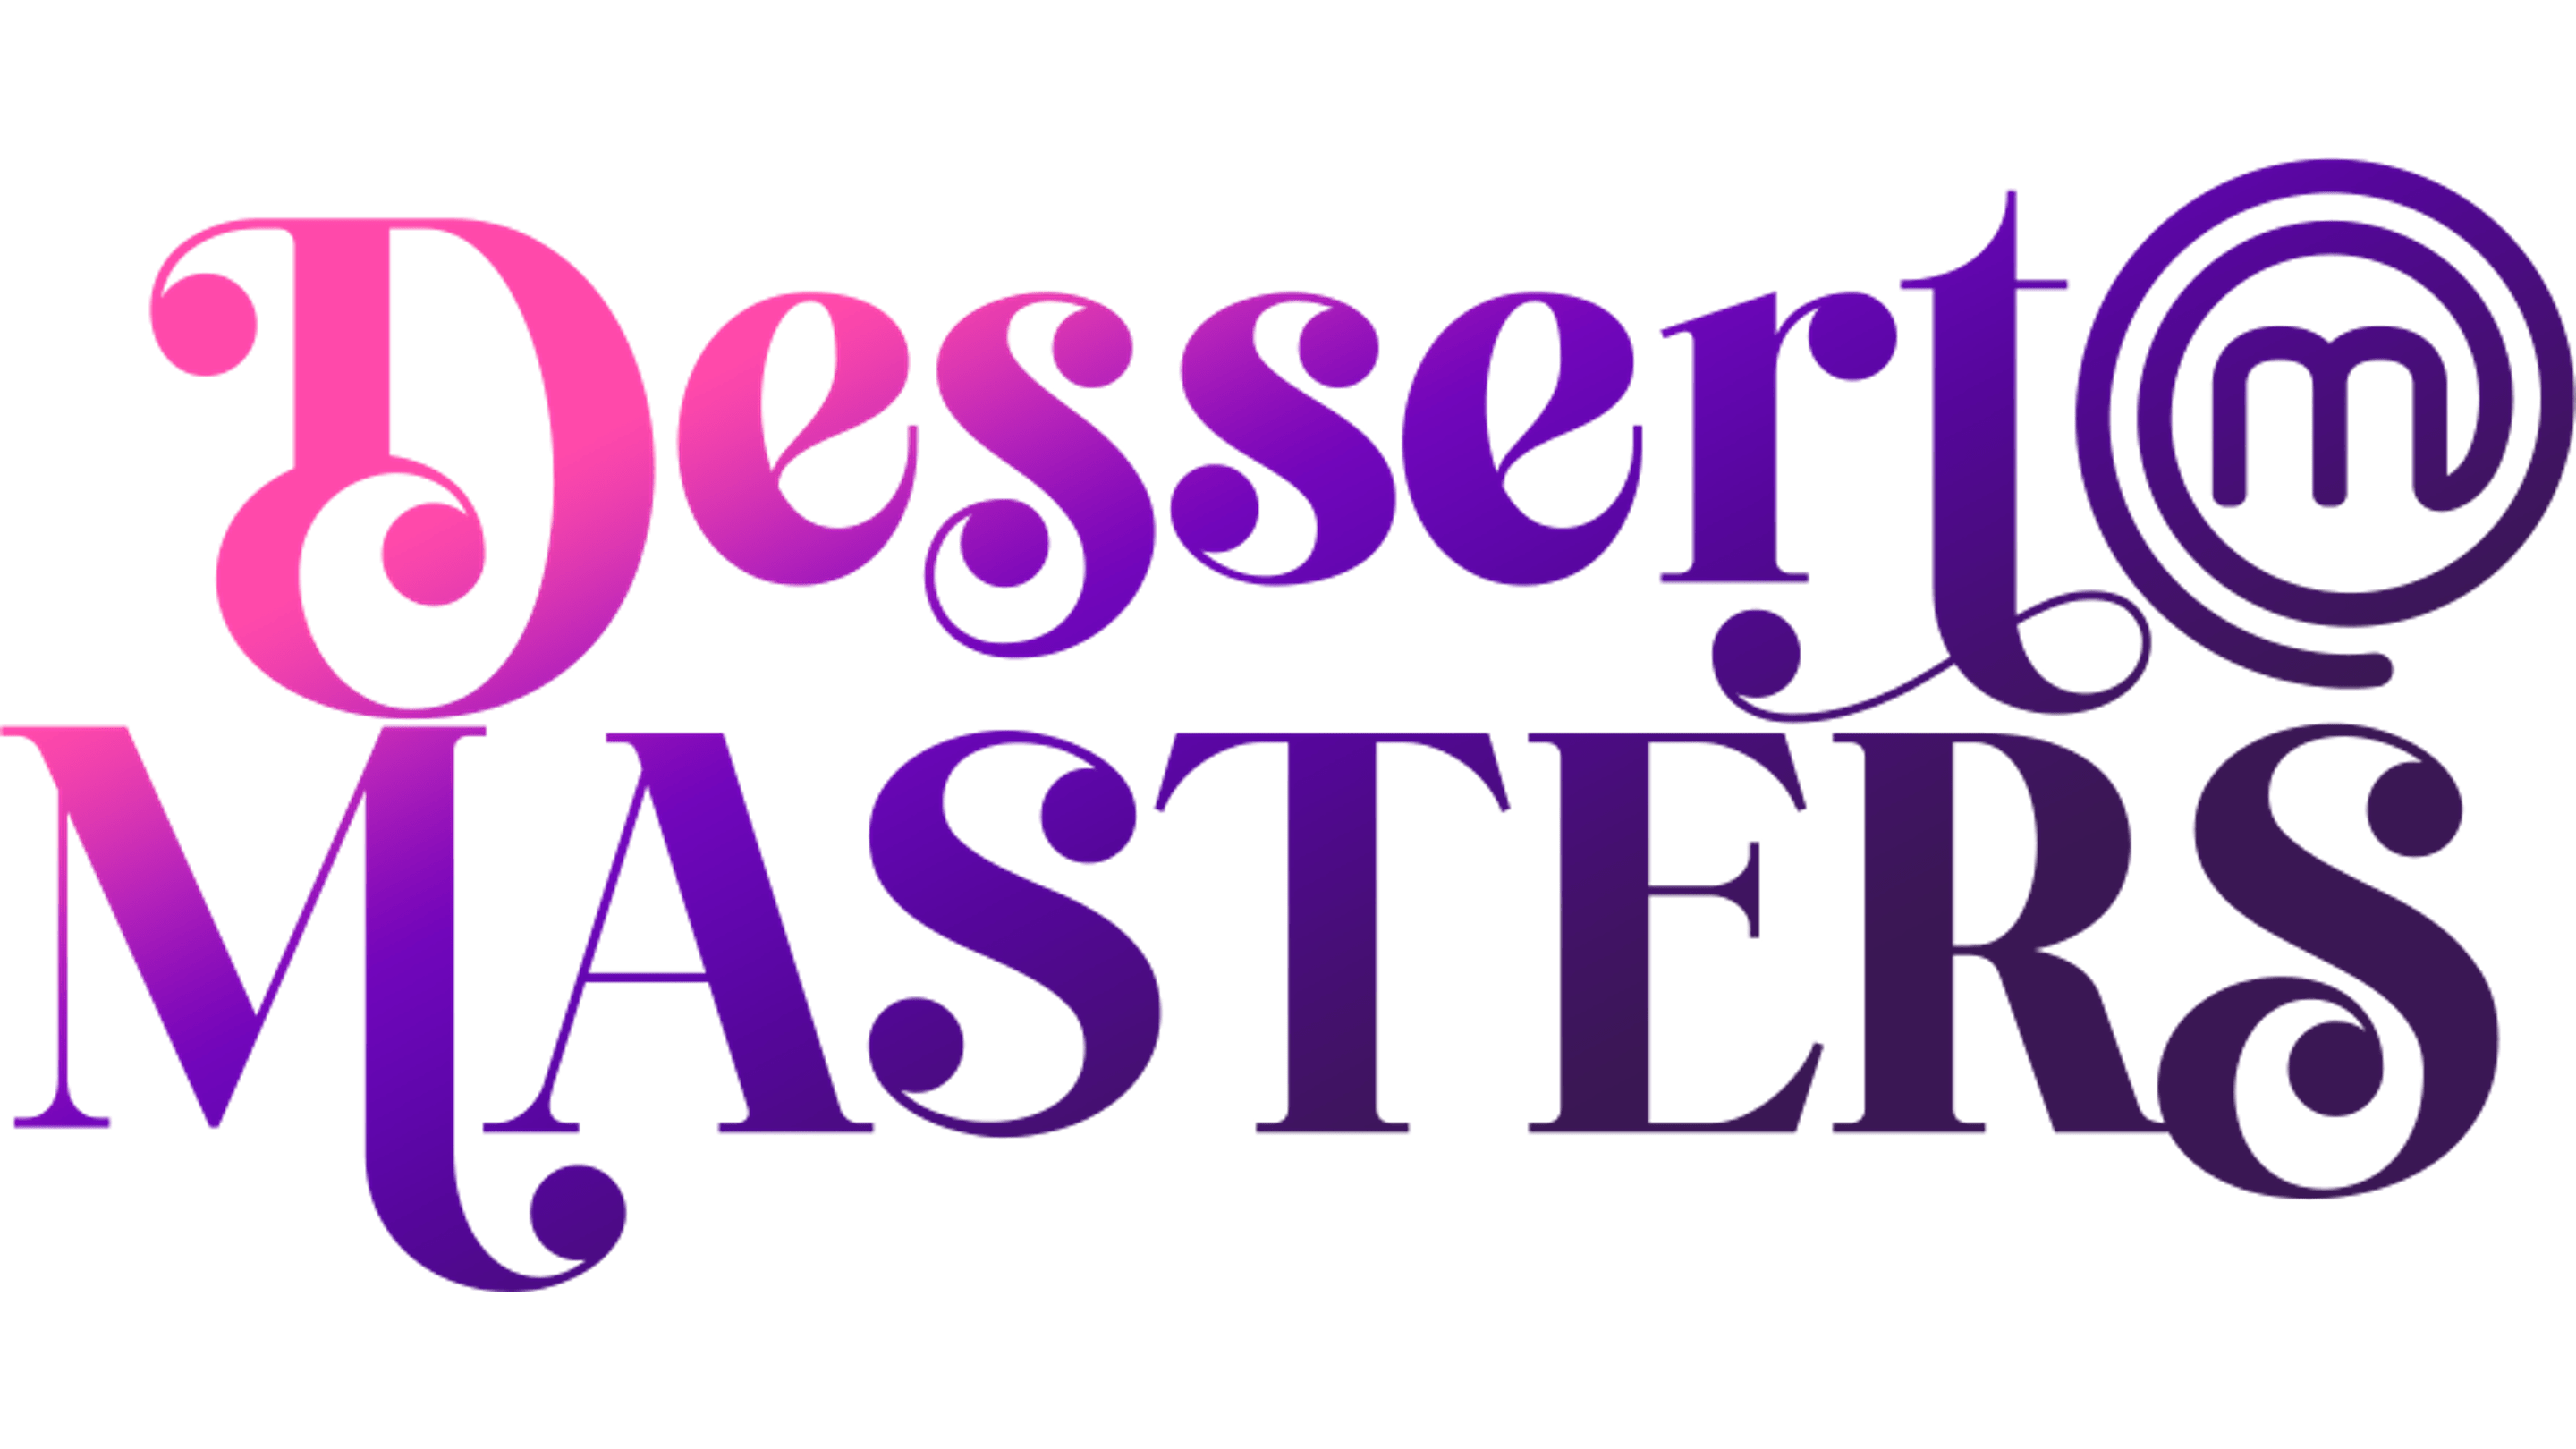 Masterchef Australia: Dessert Masters